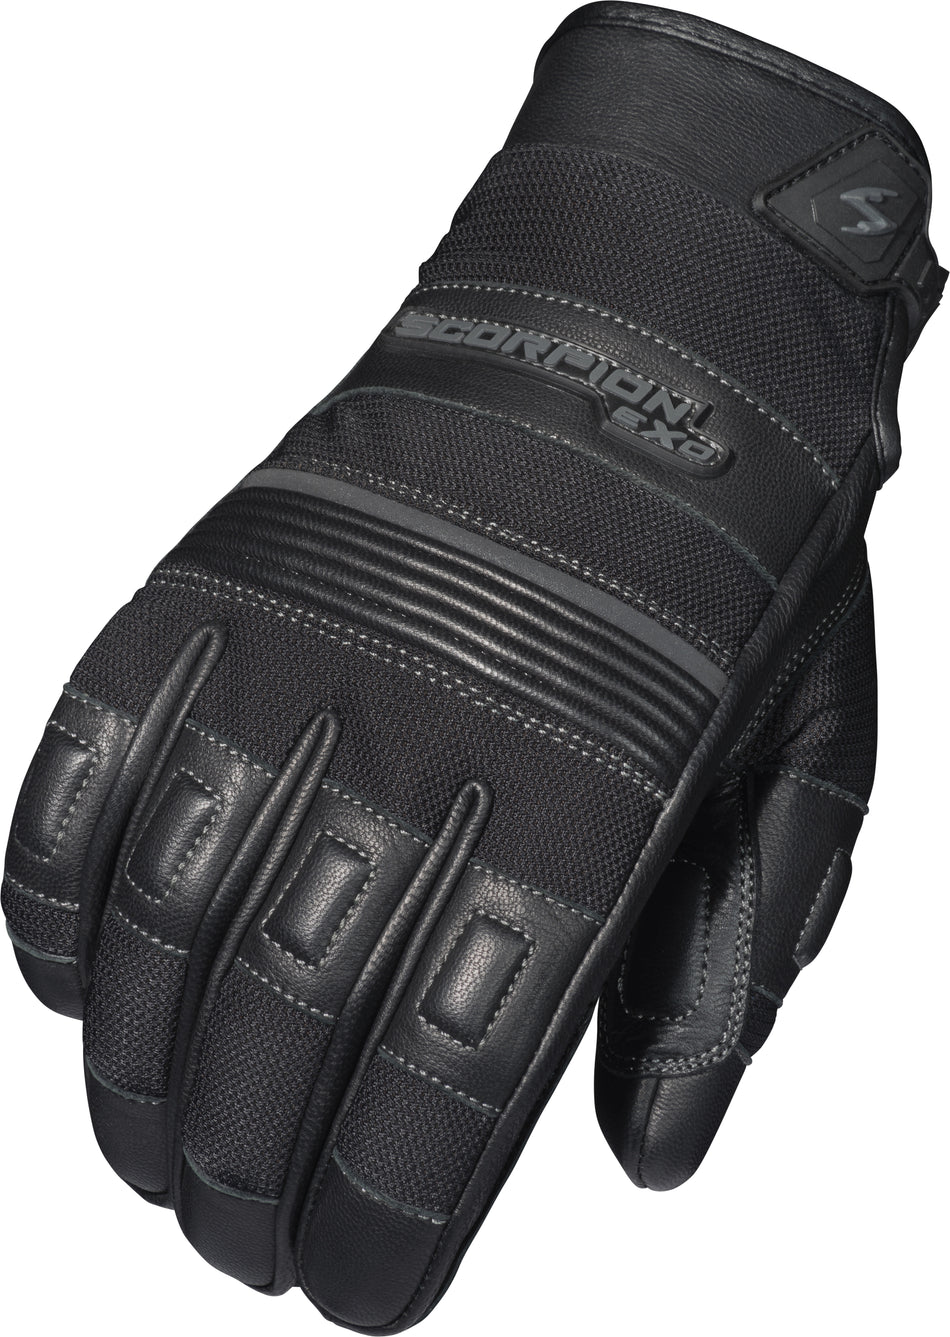 SCORPION EXO Abrams Gloves Black Lg G35-035